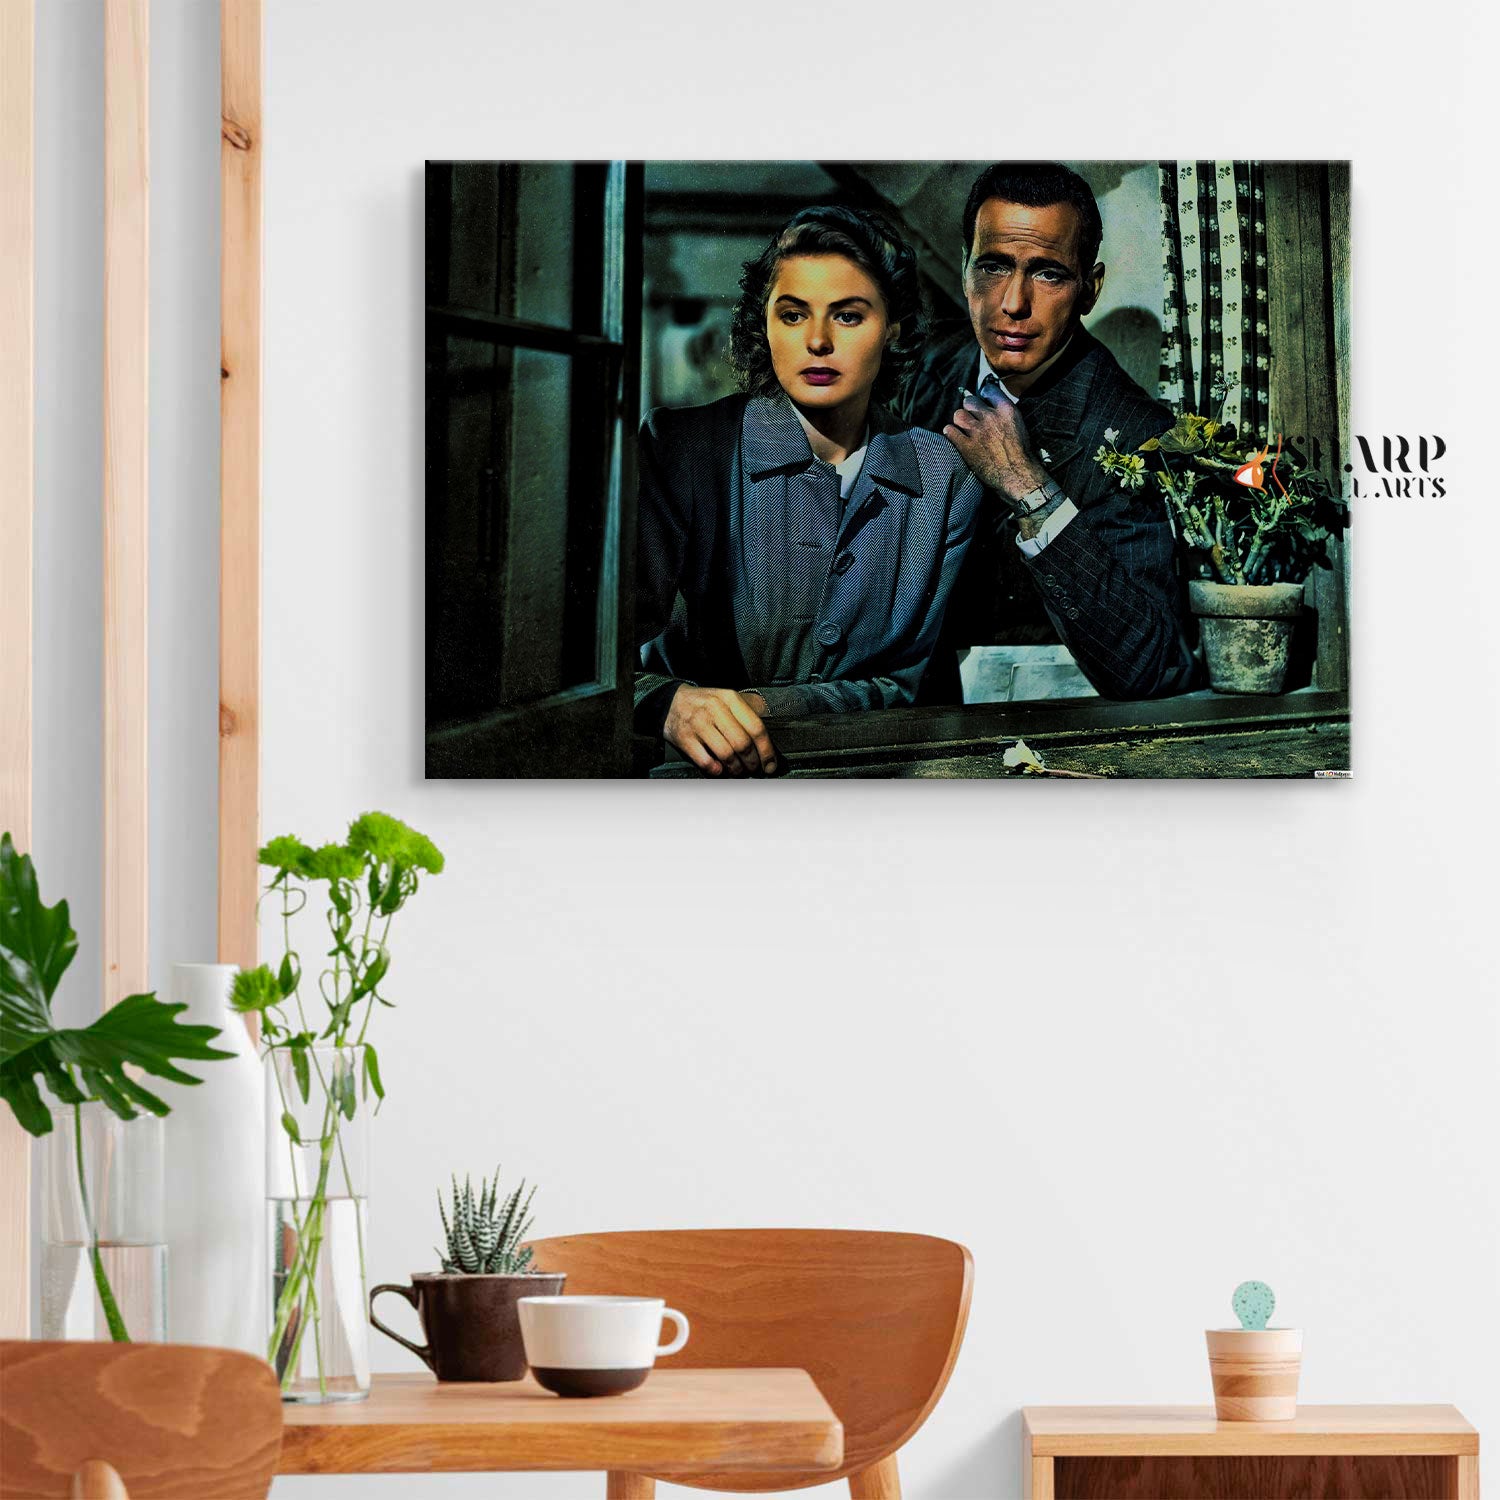 Ingrid Bergman And Humphrey Bogart In "Casablanca" Wall Art Canvas